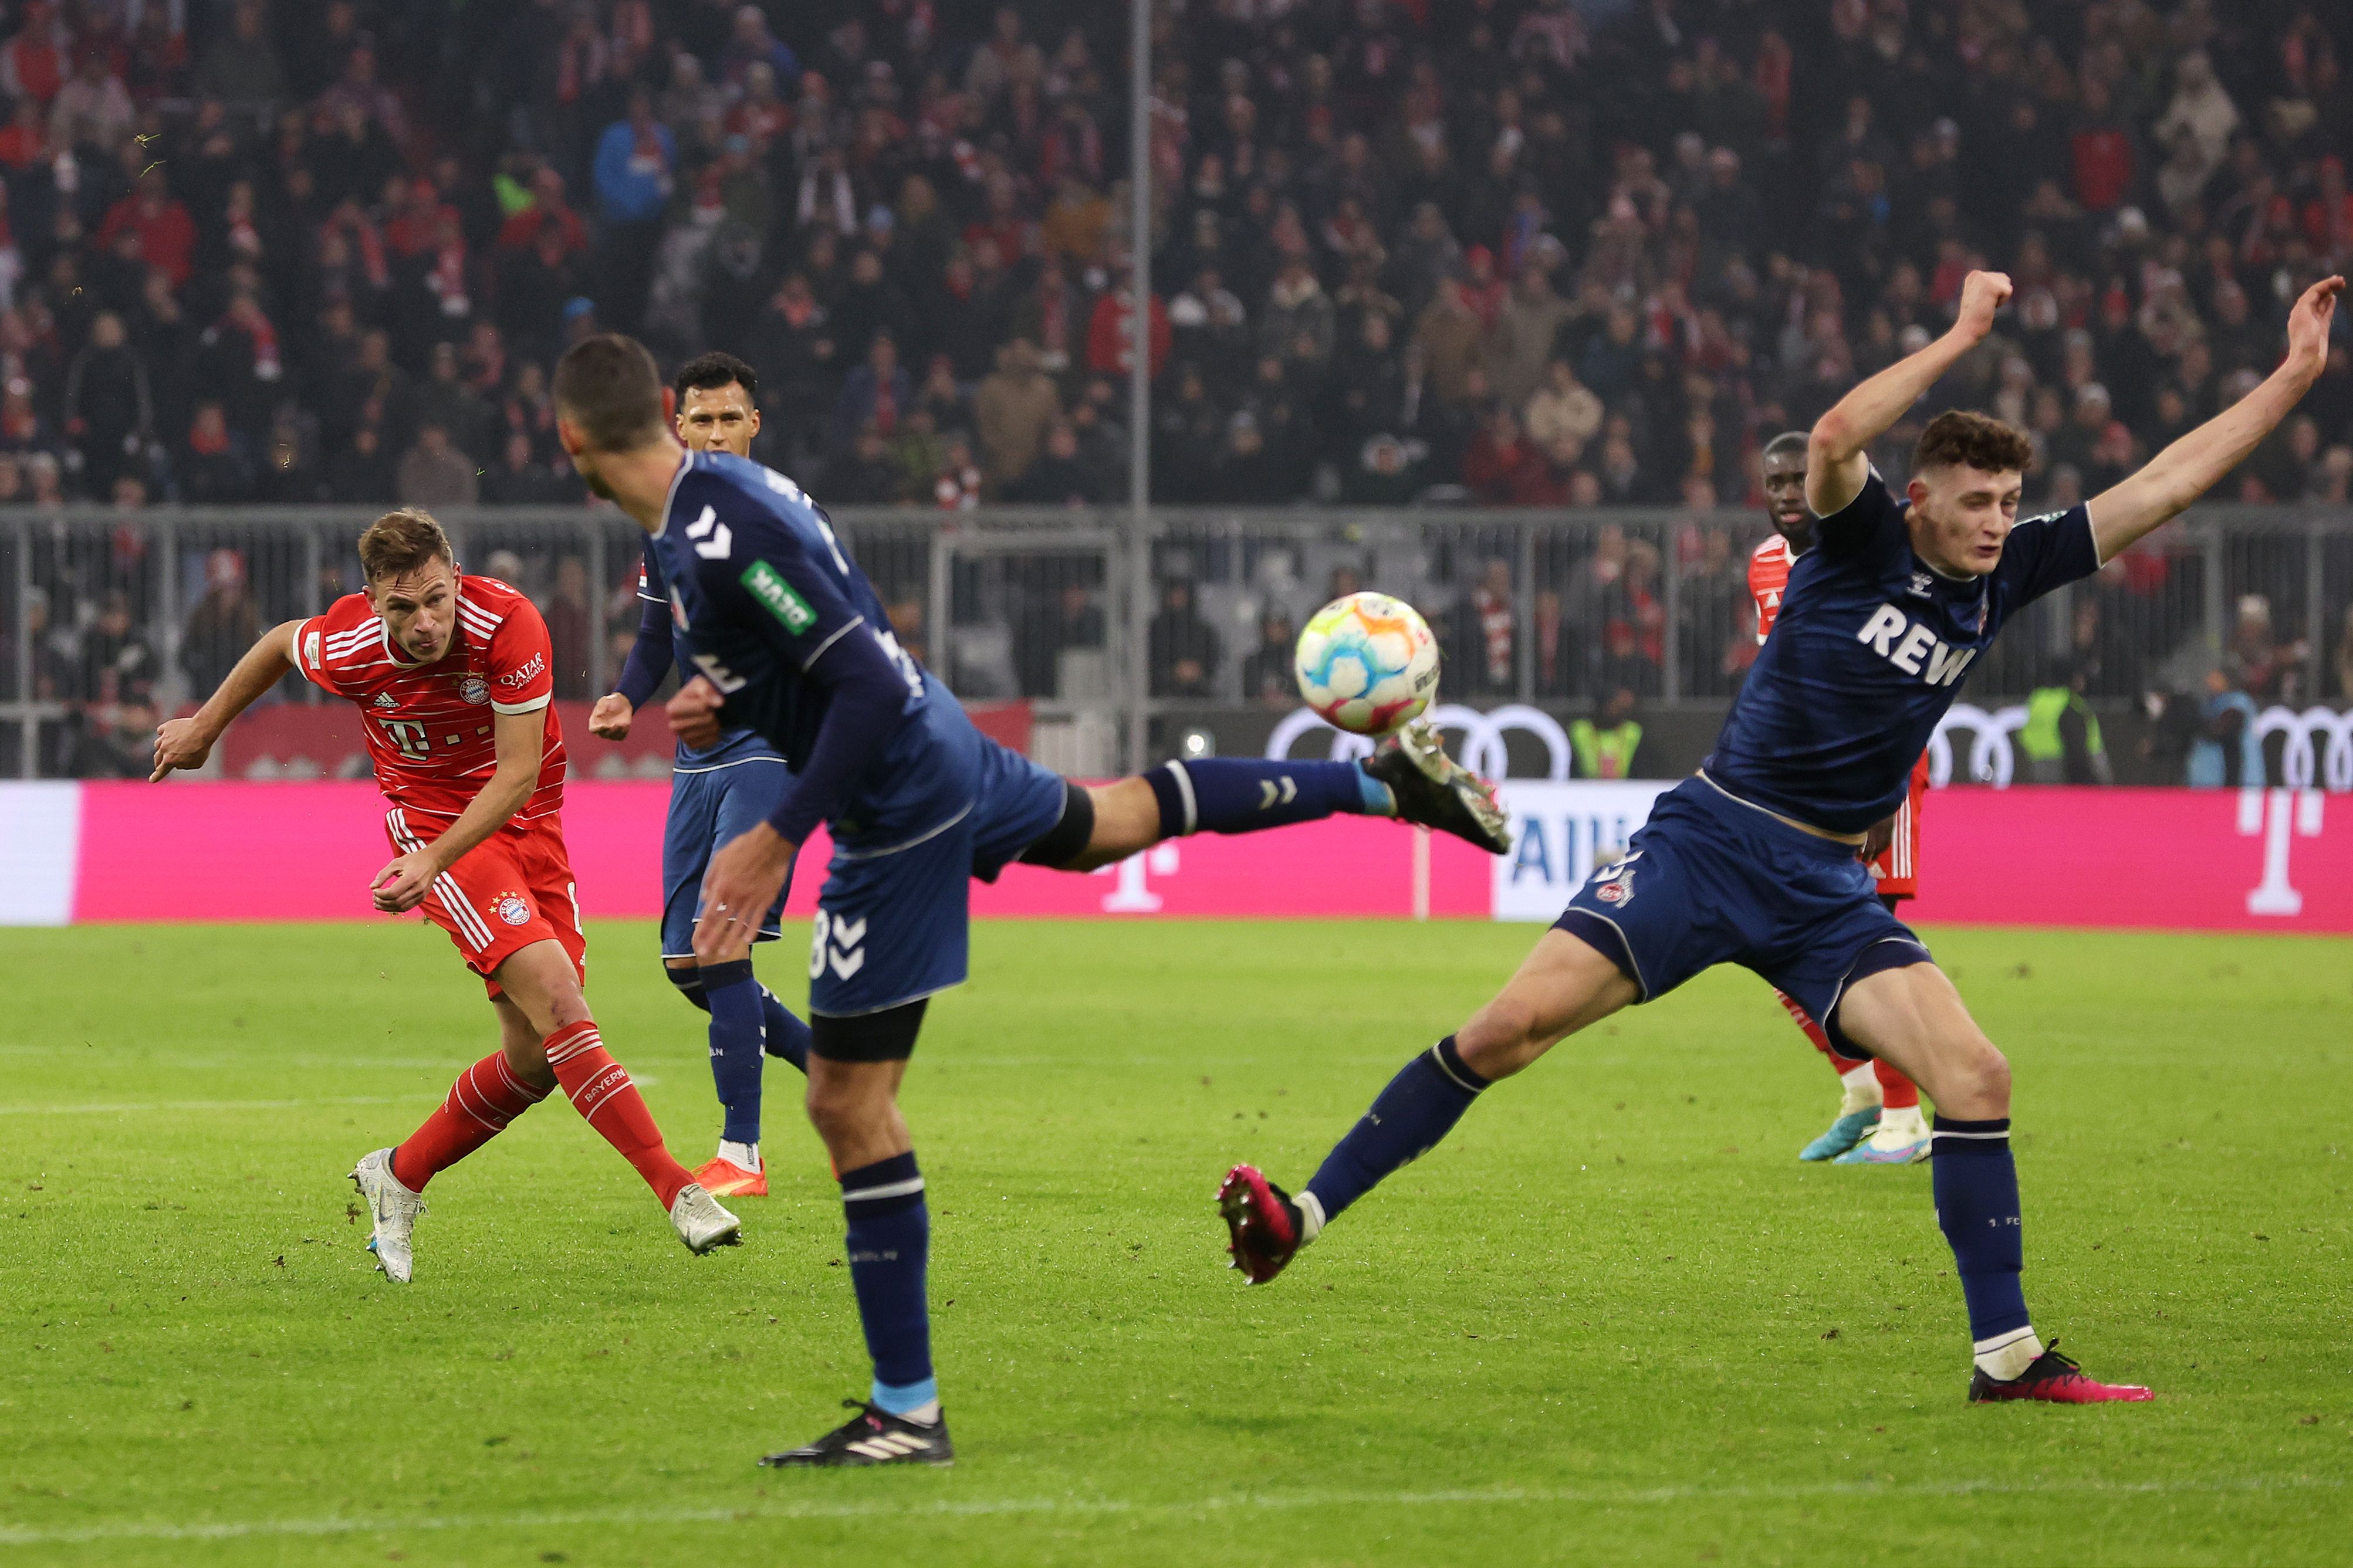 Joshua Kimmich strikes the ball for Bayern Munich